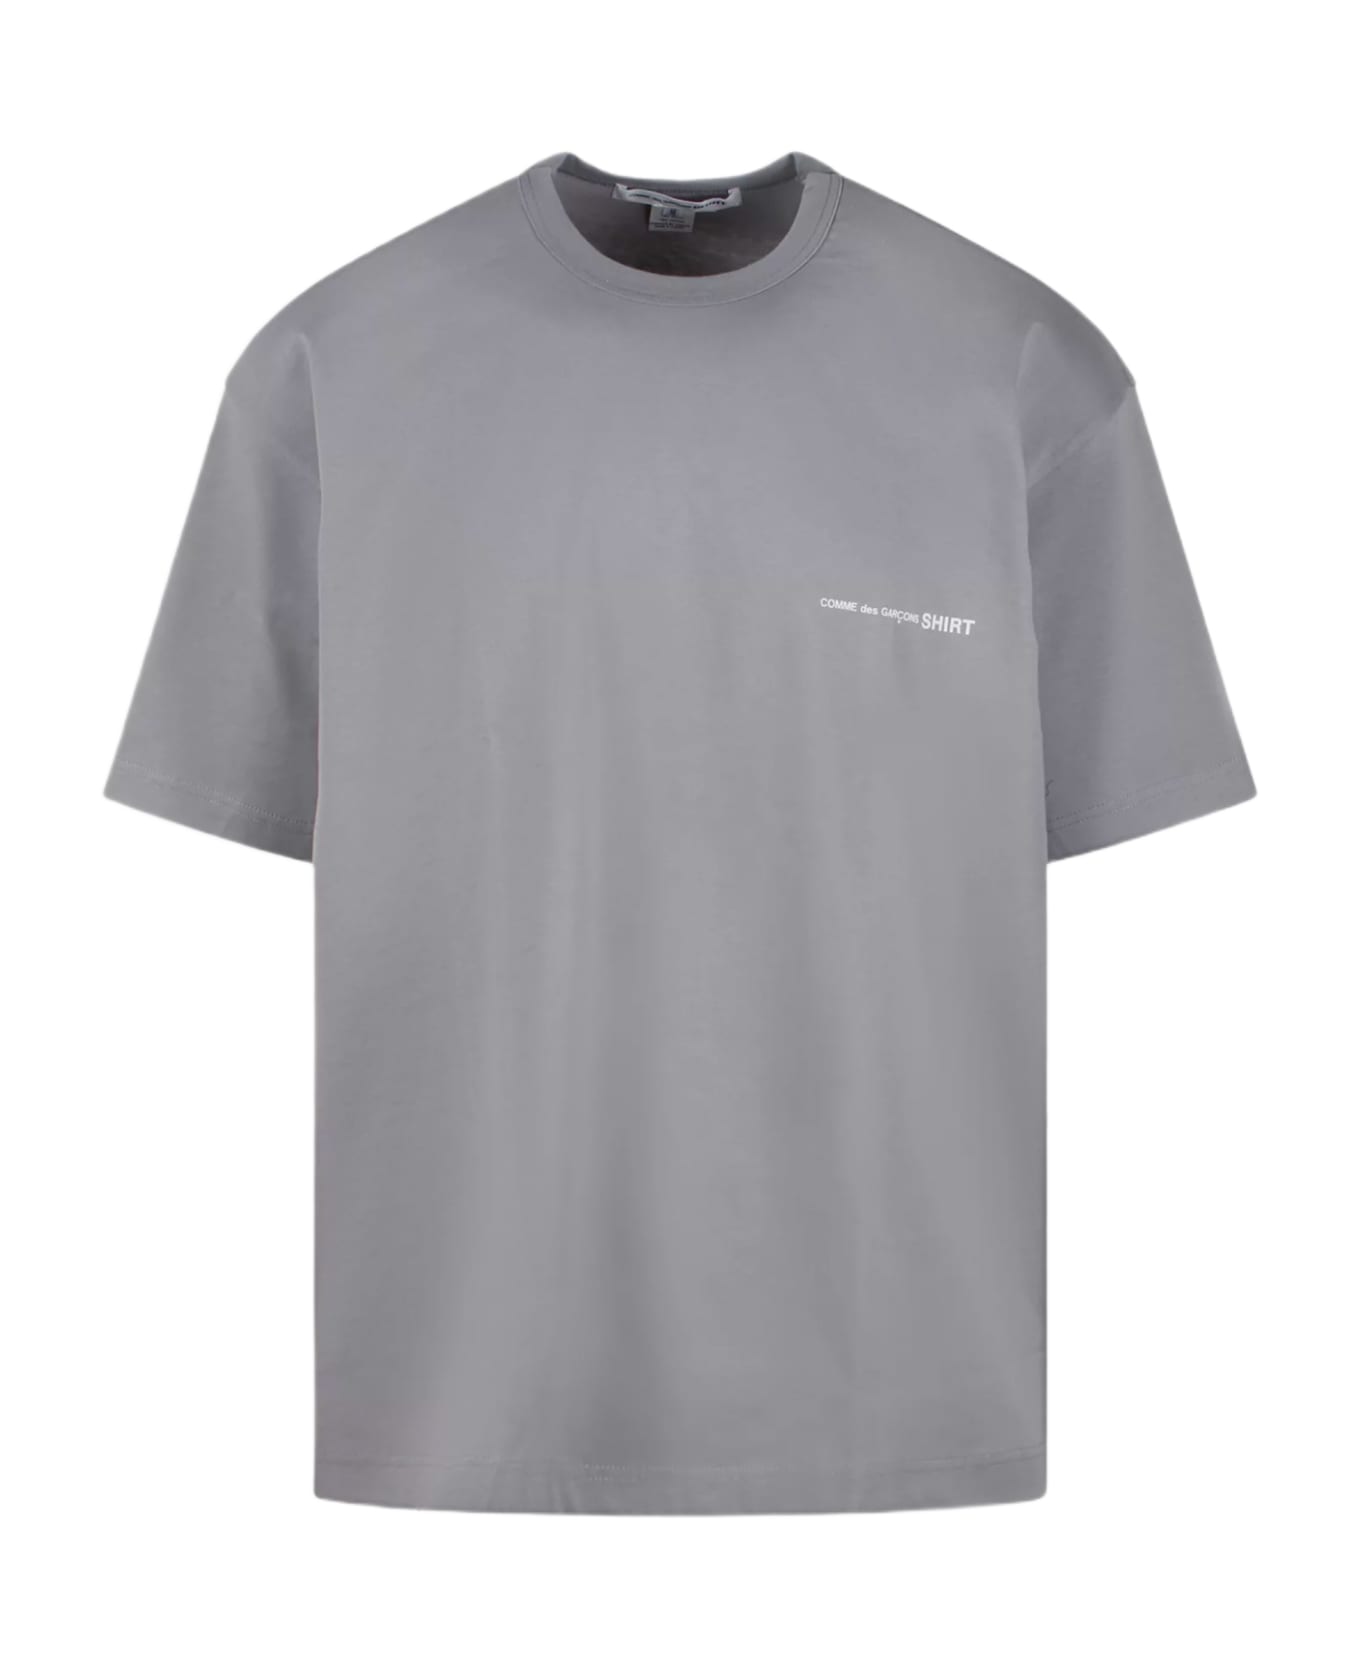 Comme des Garçons Shirt Mens T-shirt Knit Grey cotton oversize t-shirt with chest logo - Grigio シャツ